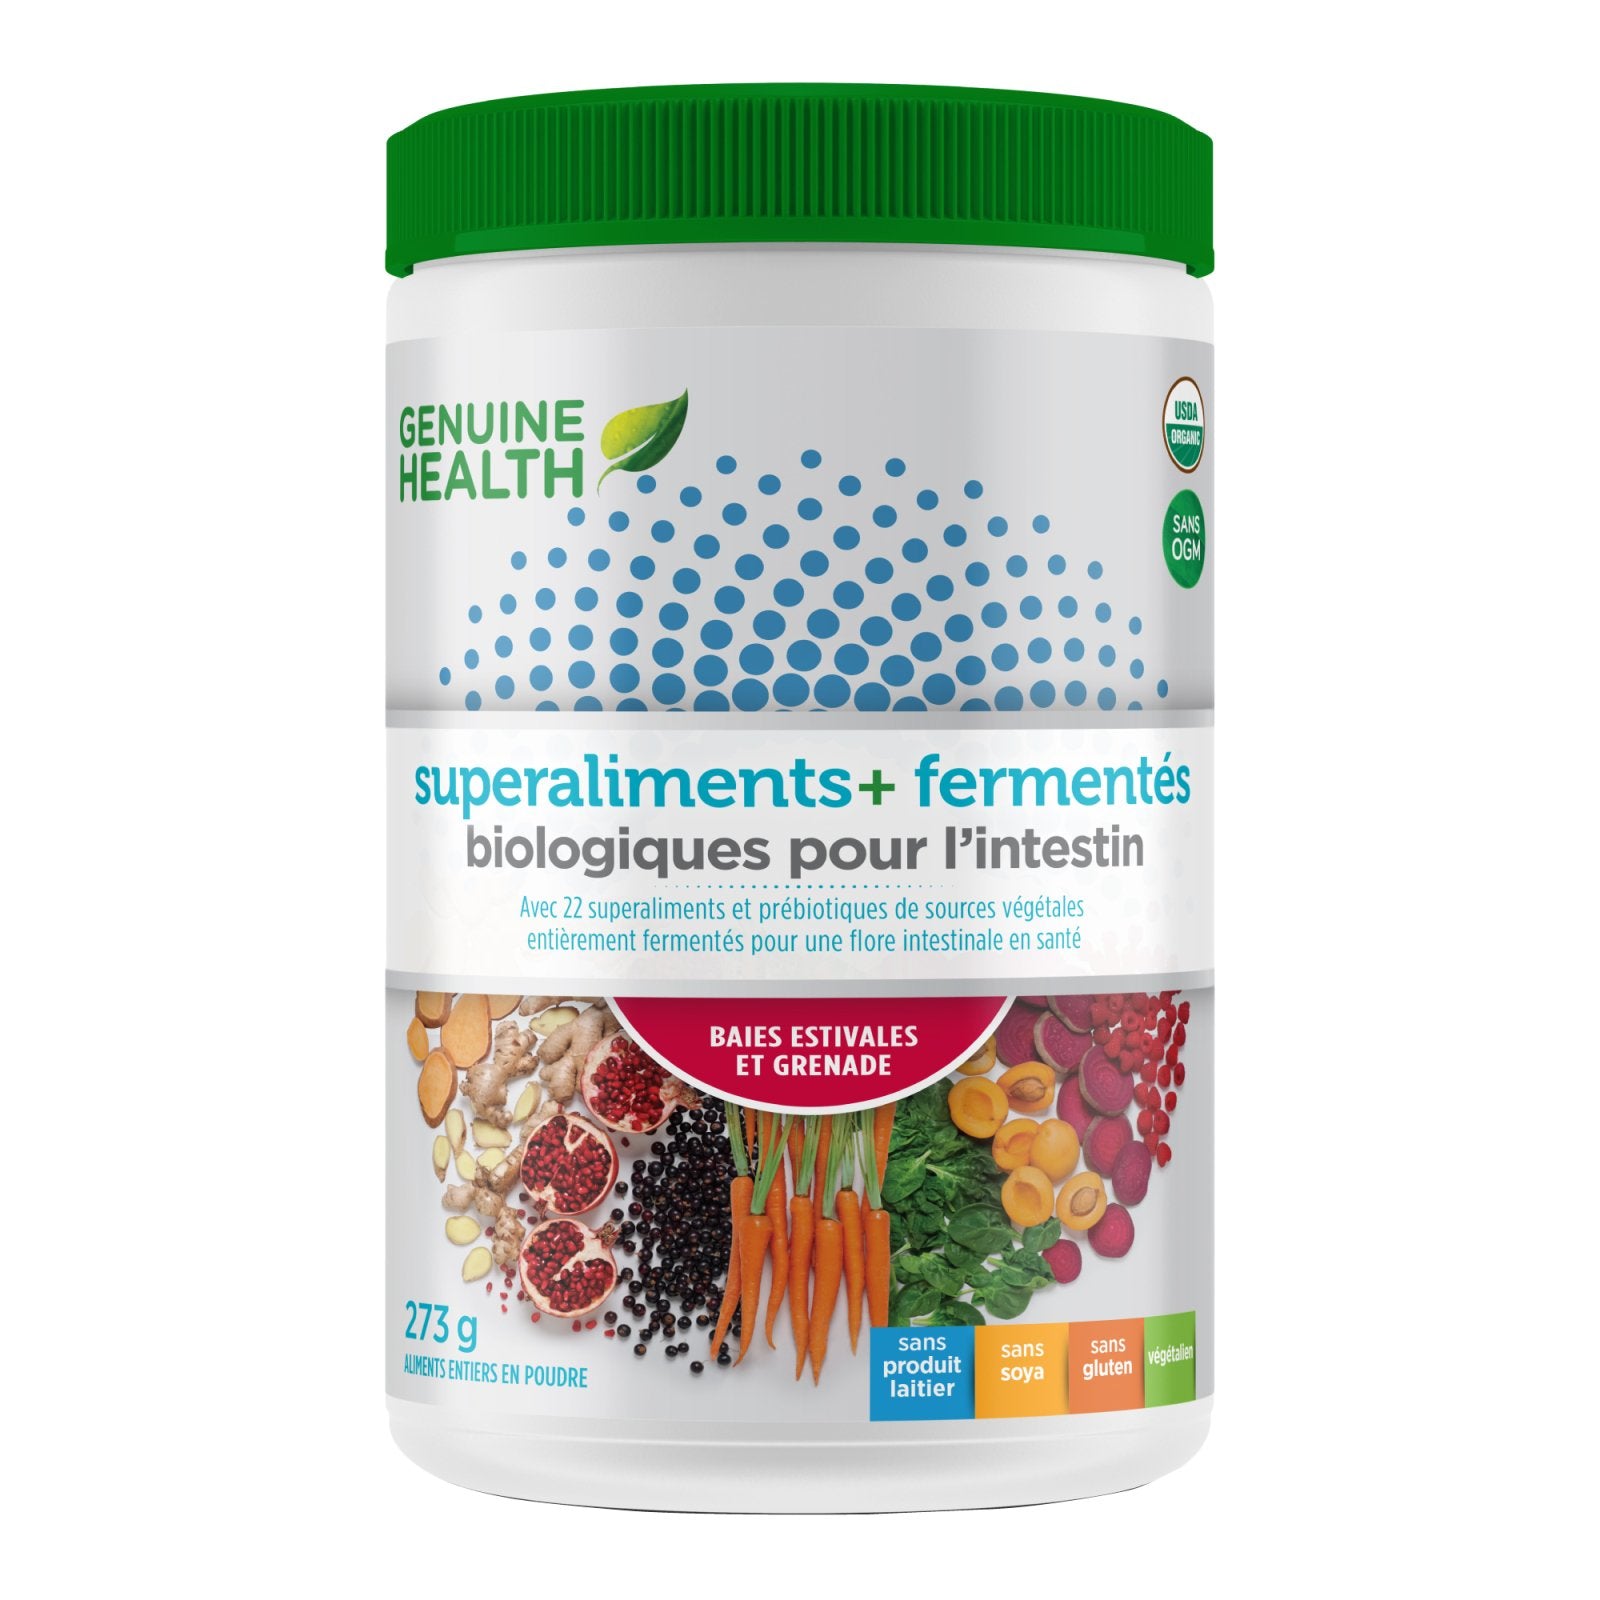 Genuine Health fermented organic gut superfoods summer berry - pomegranate (273 g)